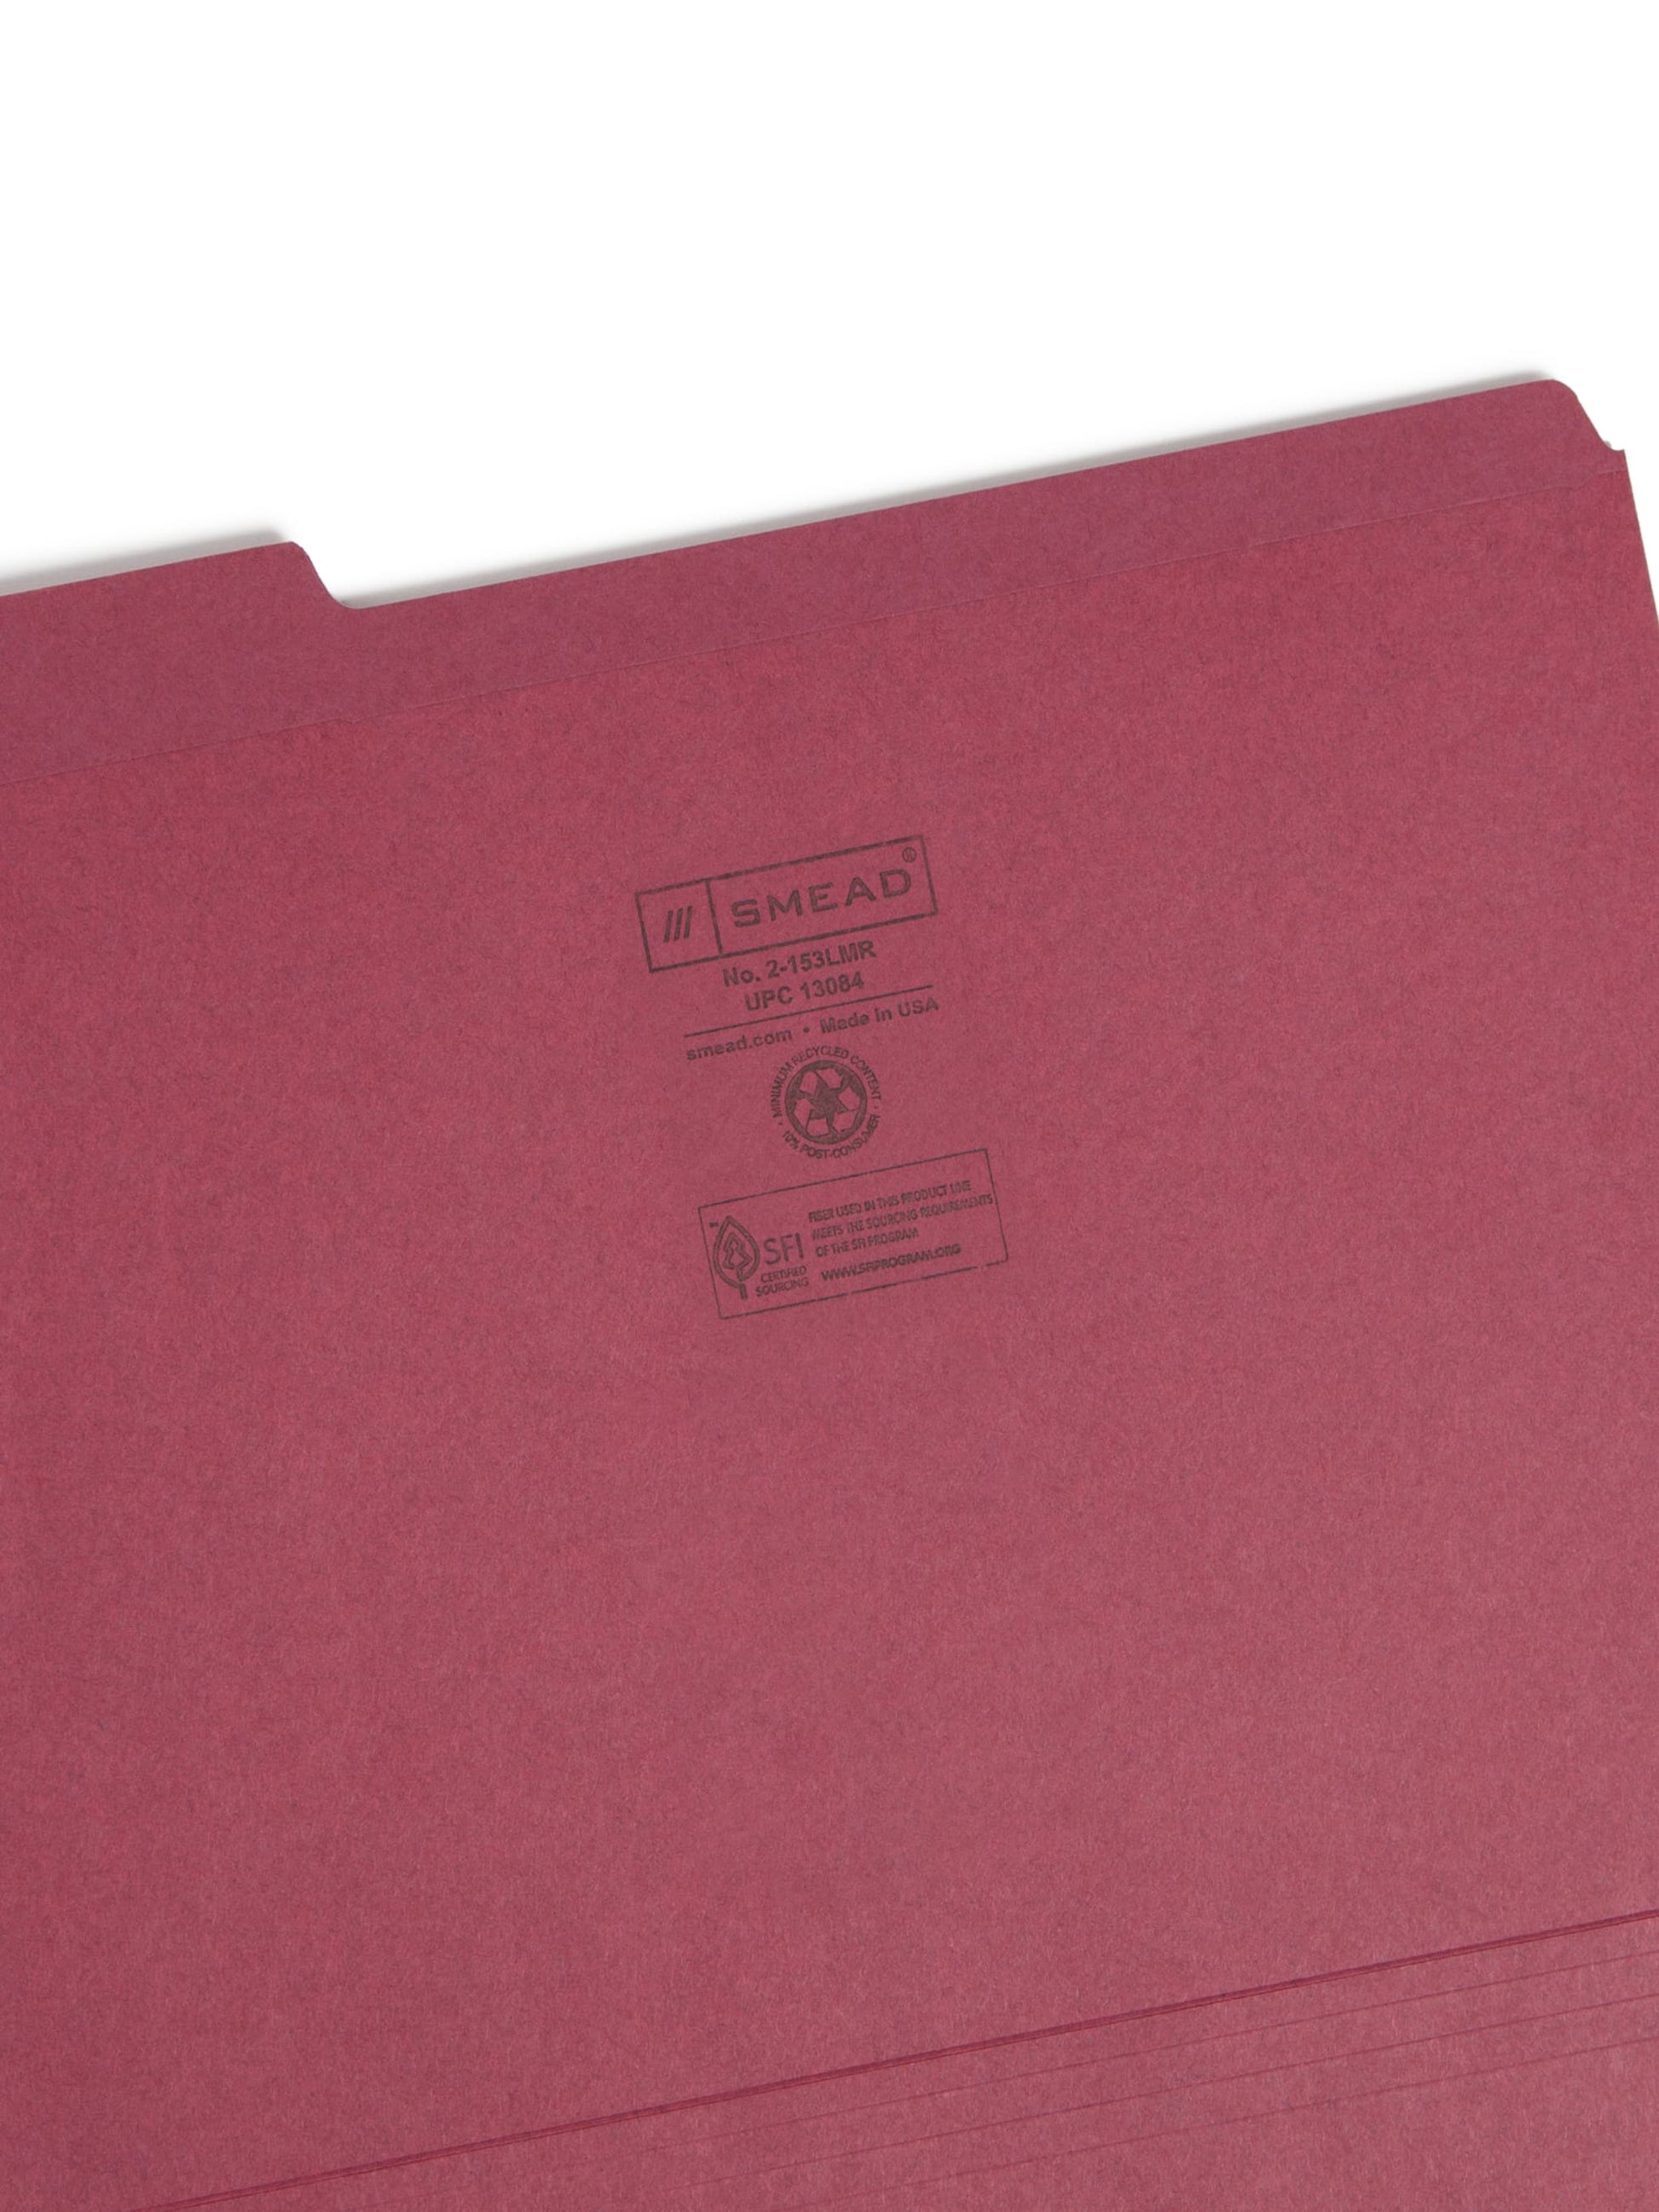 Reinforced Tab File Folders, 1/3-Cut Tab, Maroon Color, Letter Size, Set of 100, 086486130844